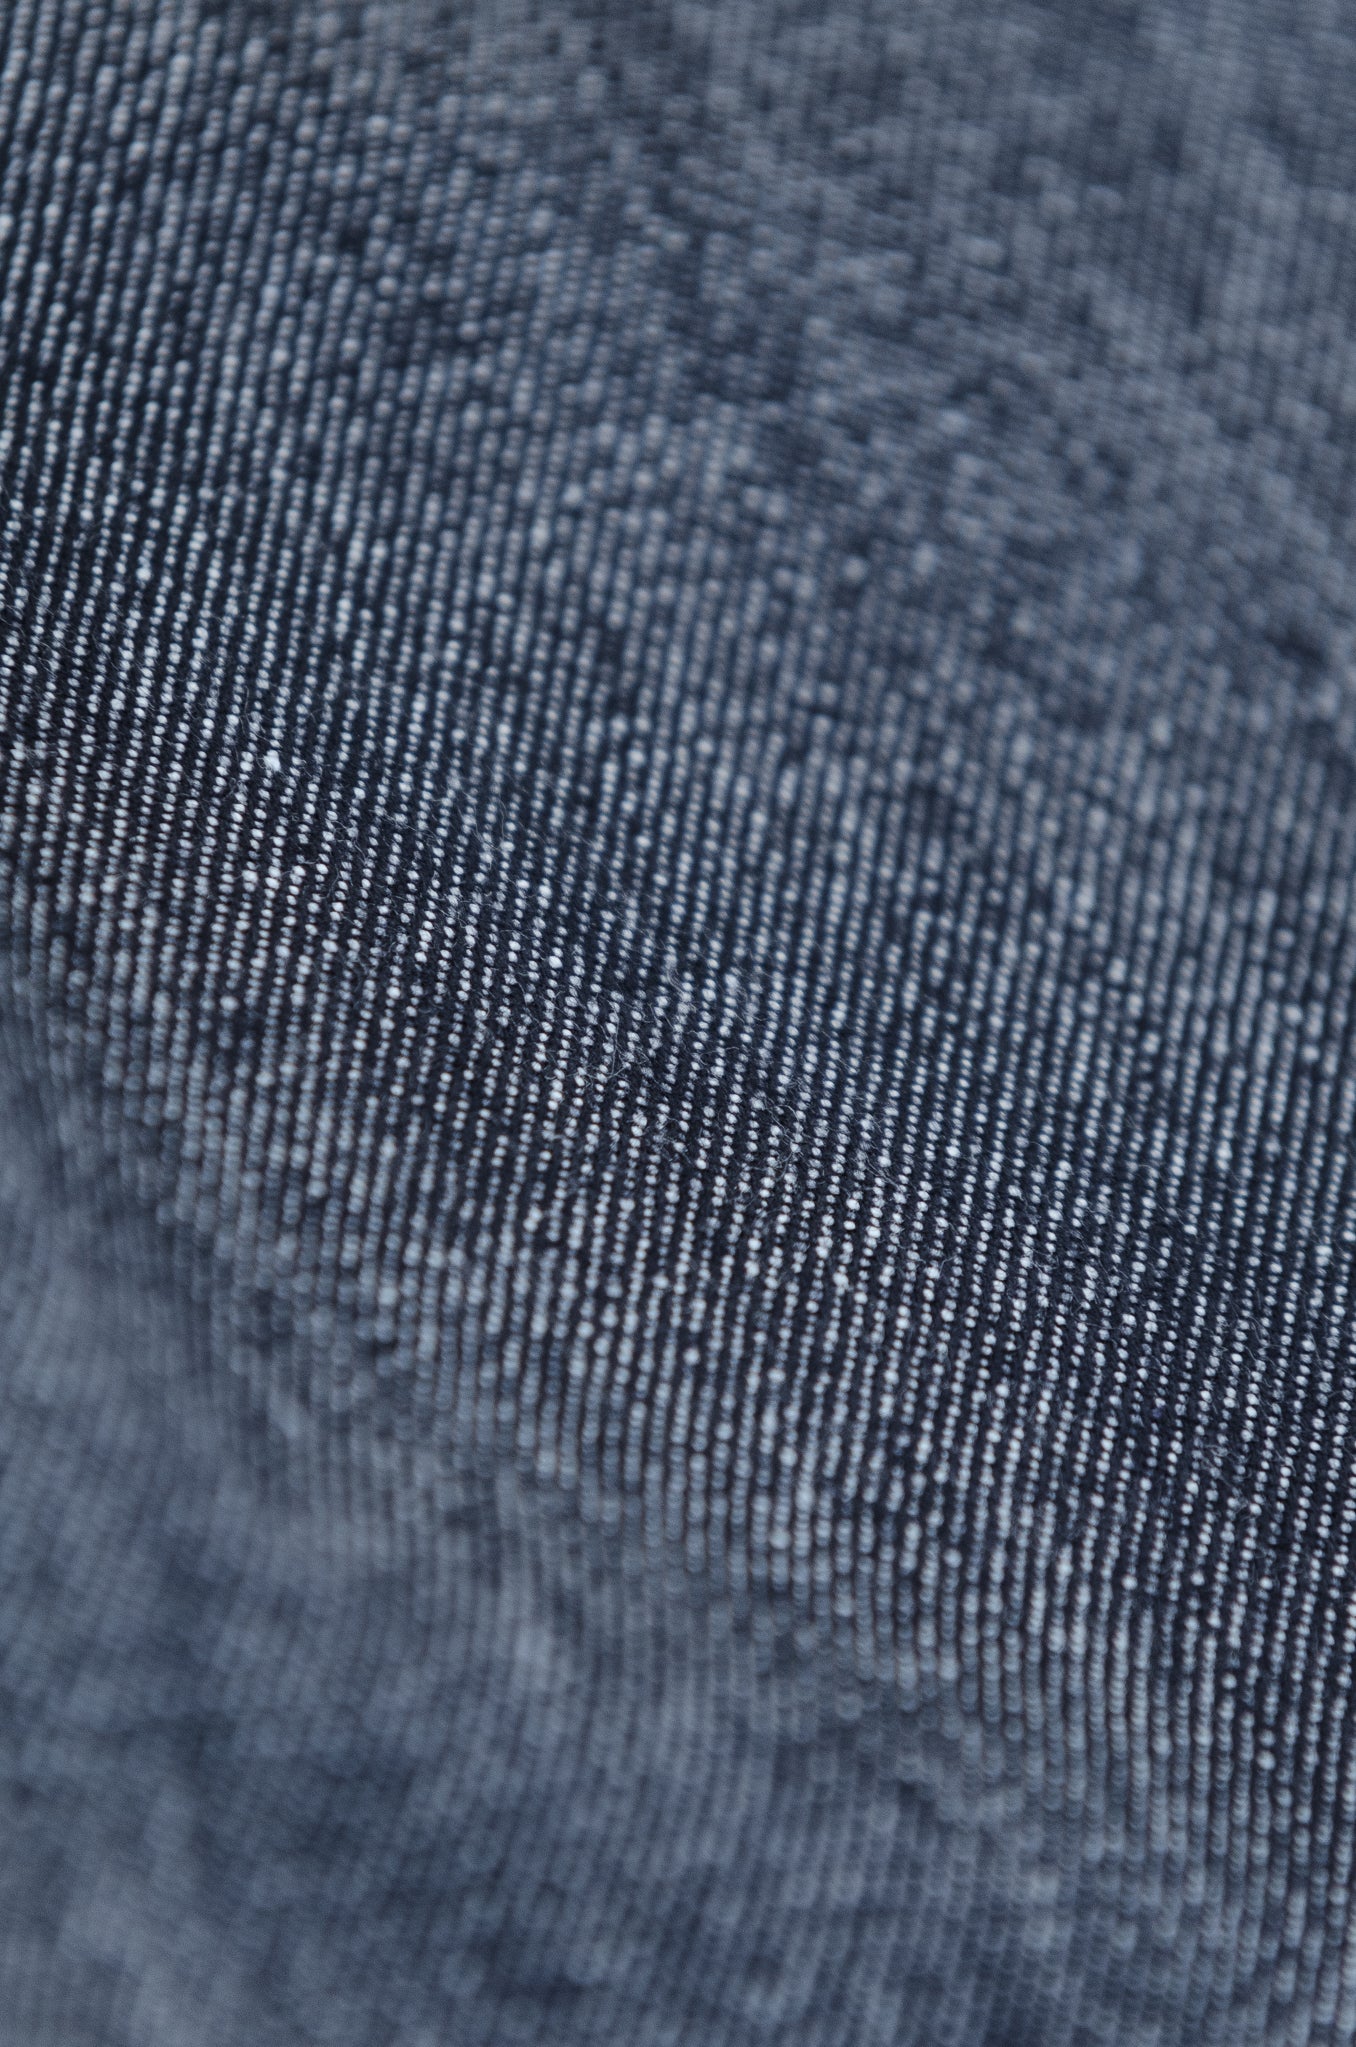 Boris Chino Denim Pants Cotton and Wool Stretch (dark blue)